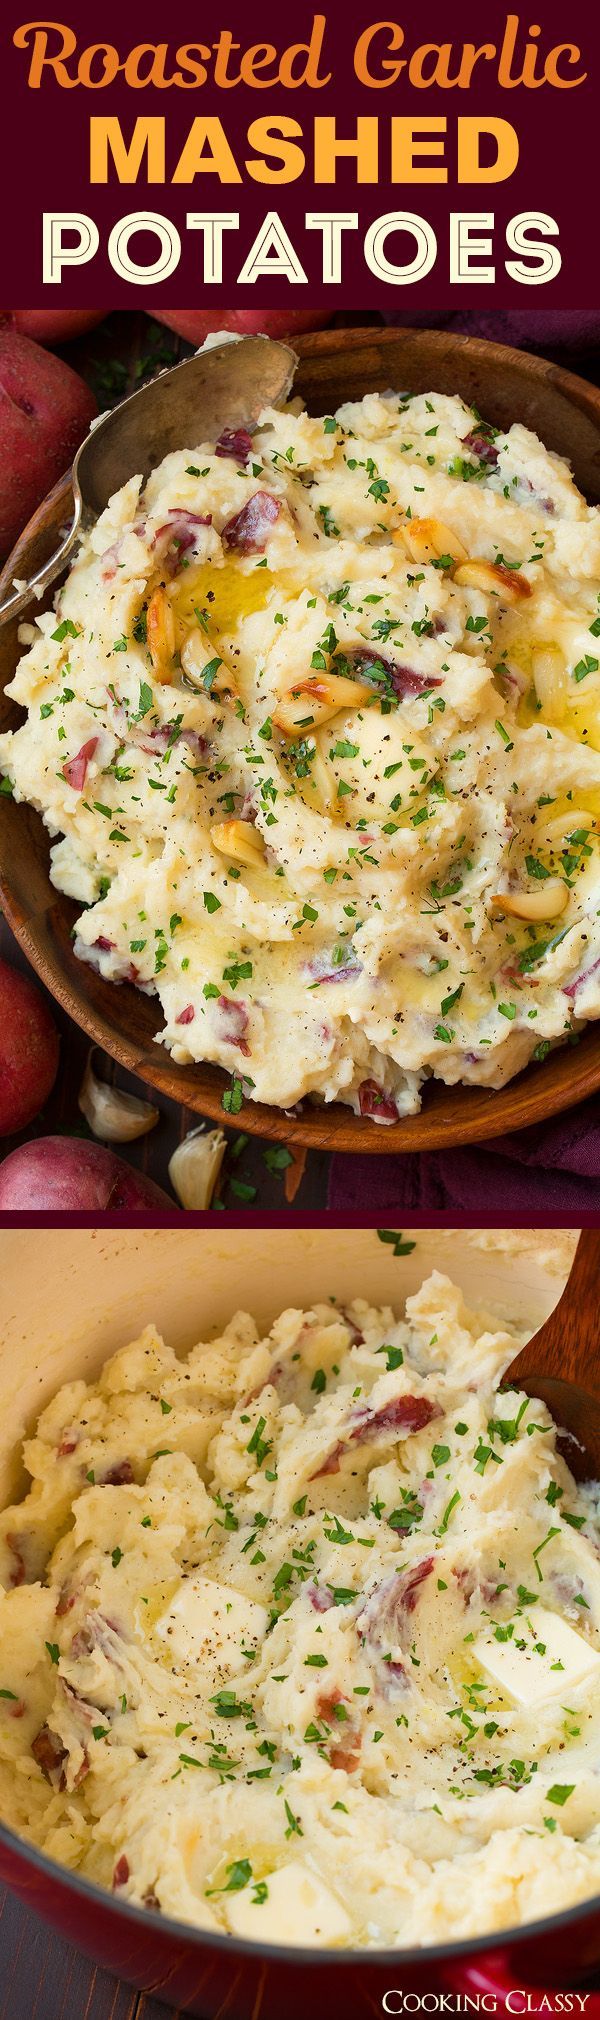 Roasted Garlic Mashed Potatoes – the ultimate comfort food! The roasted garlic mak